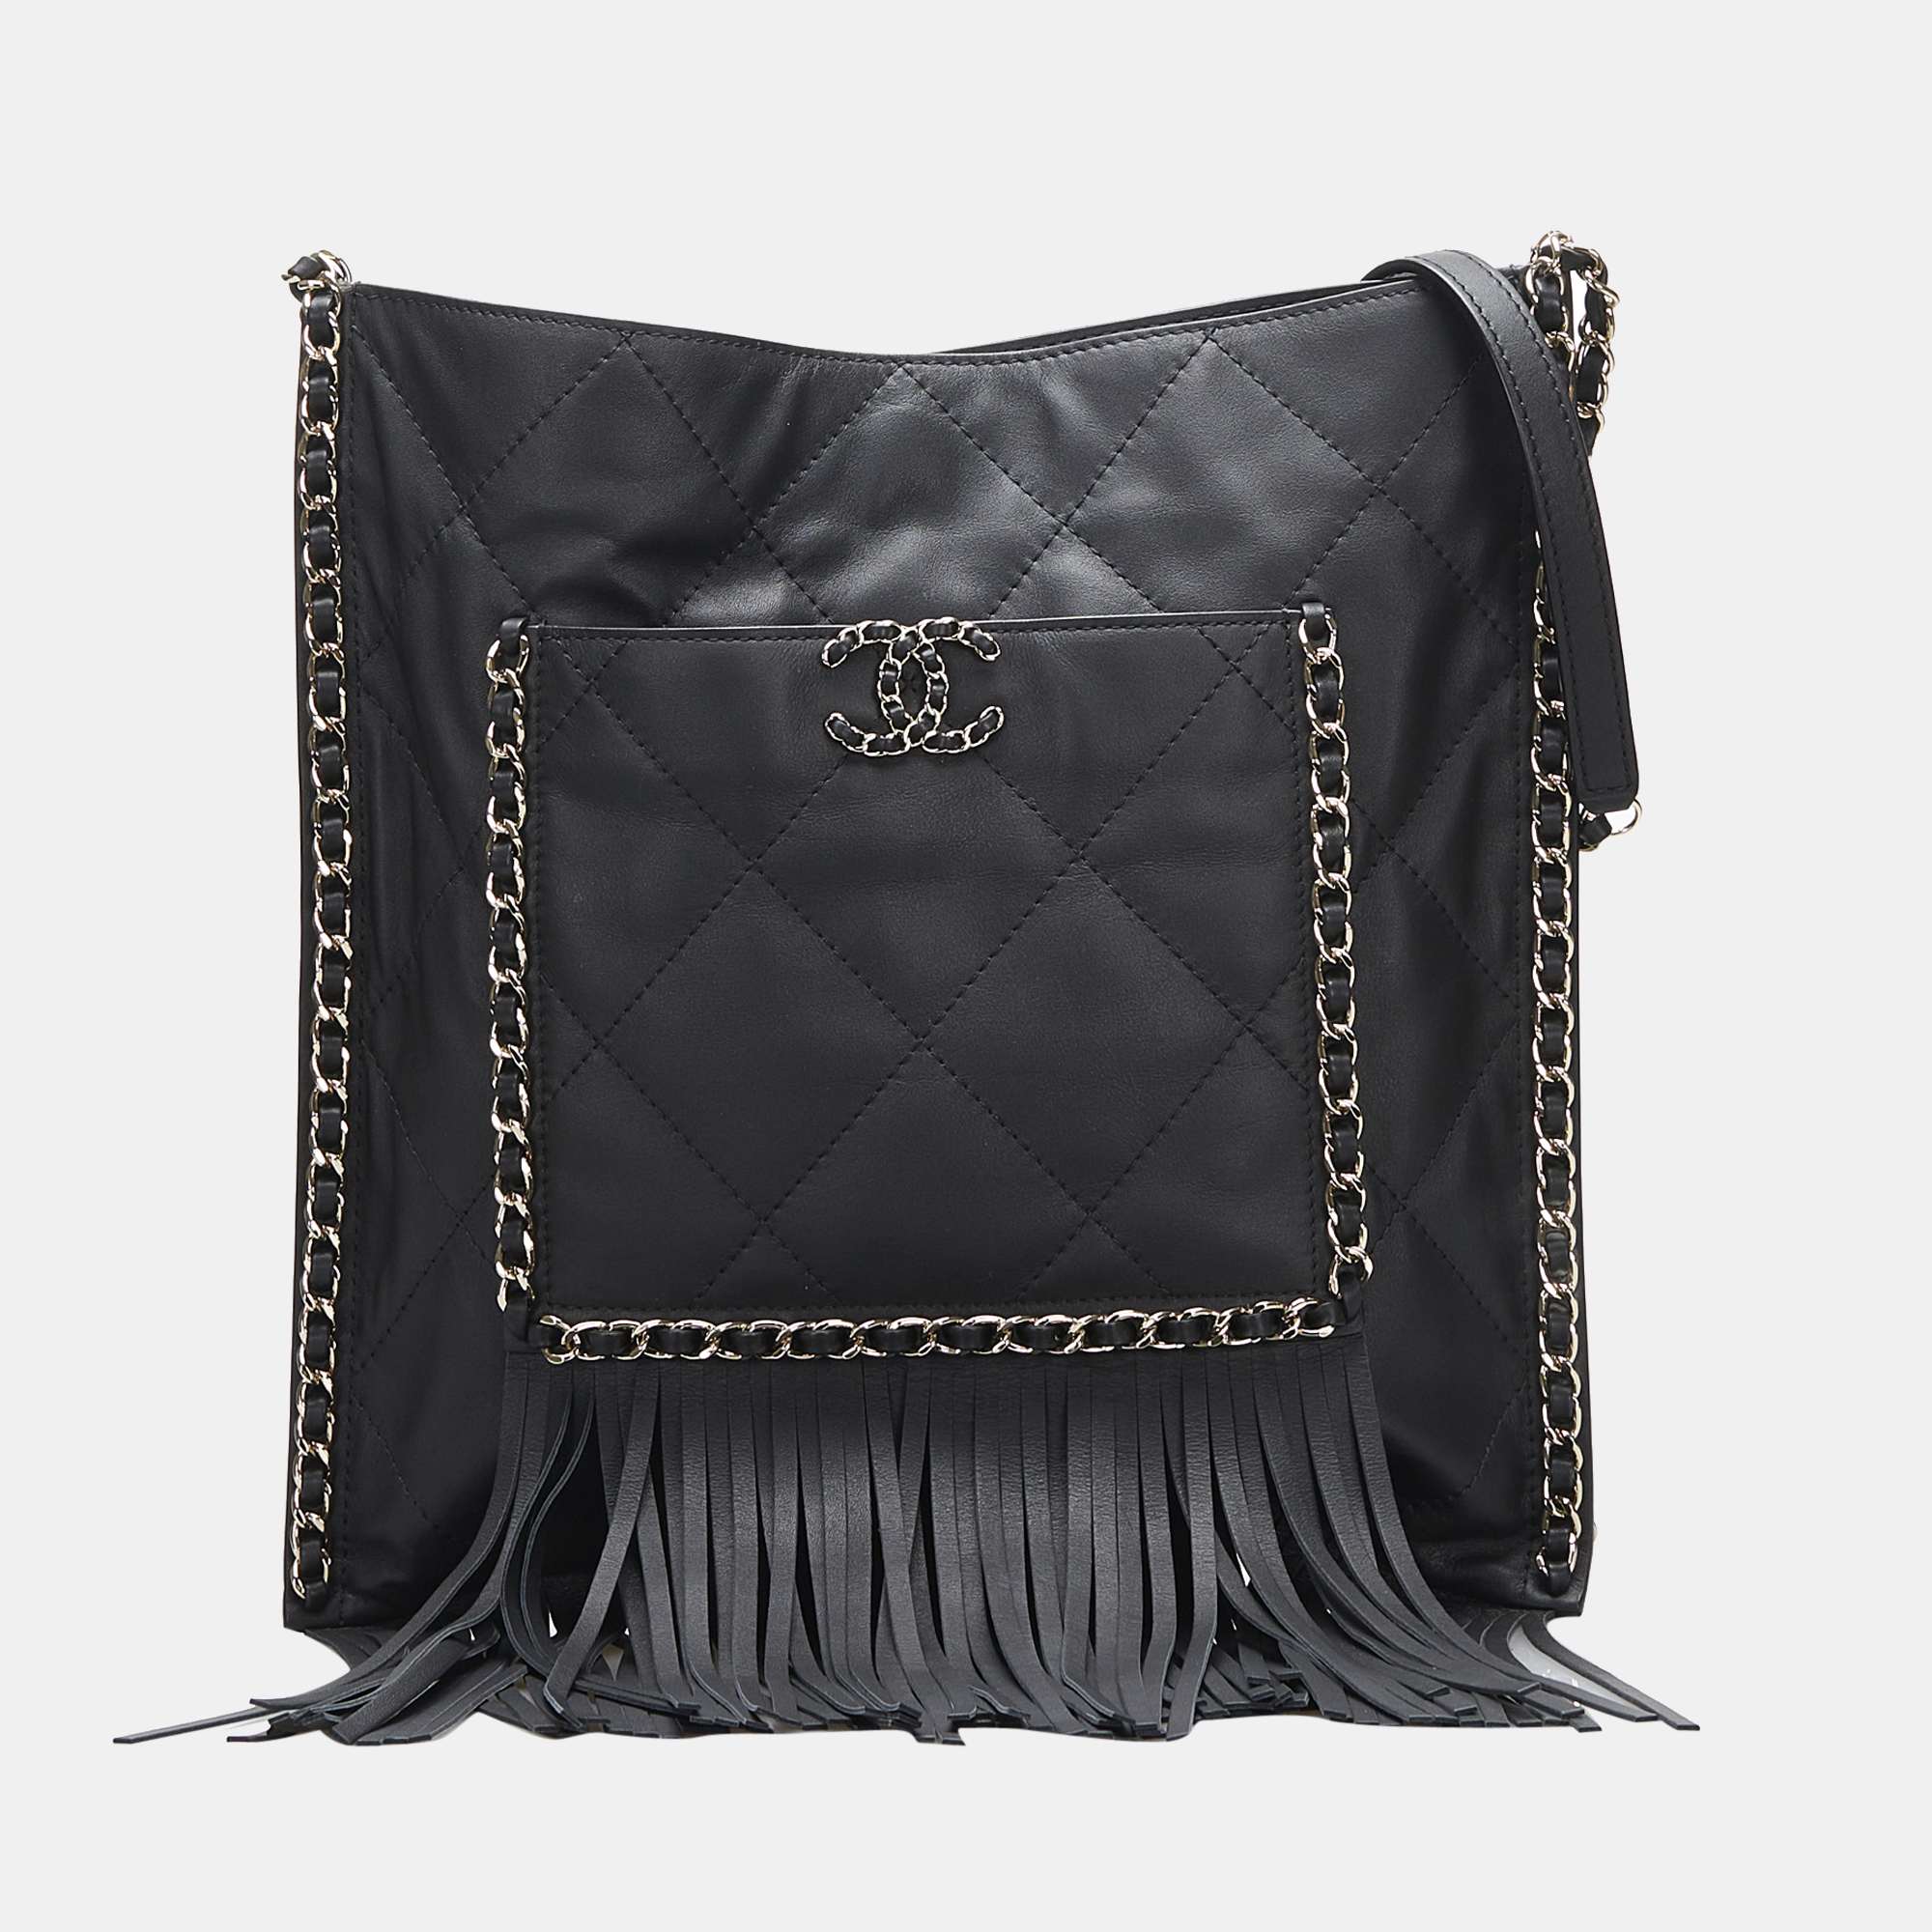 Chanel Black Small Fringe Shopping Bag